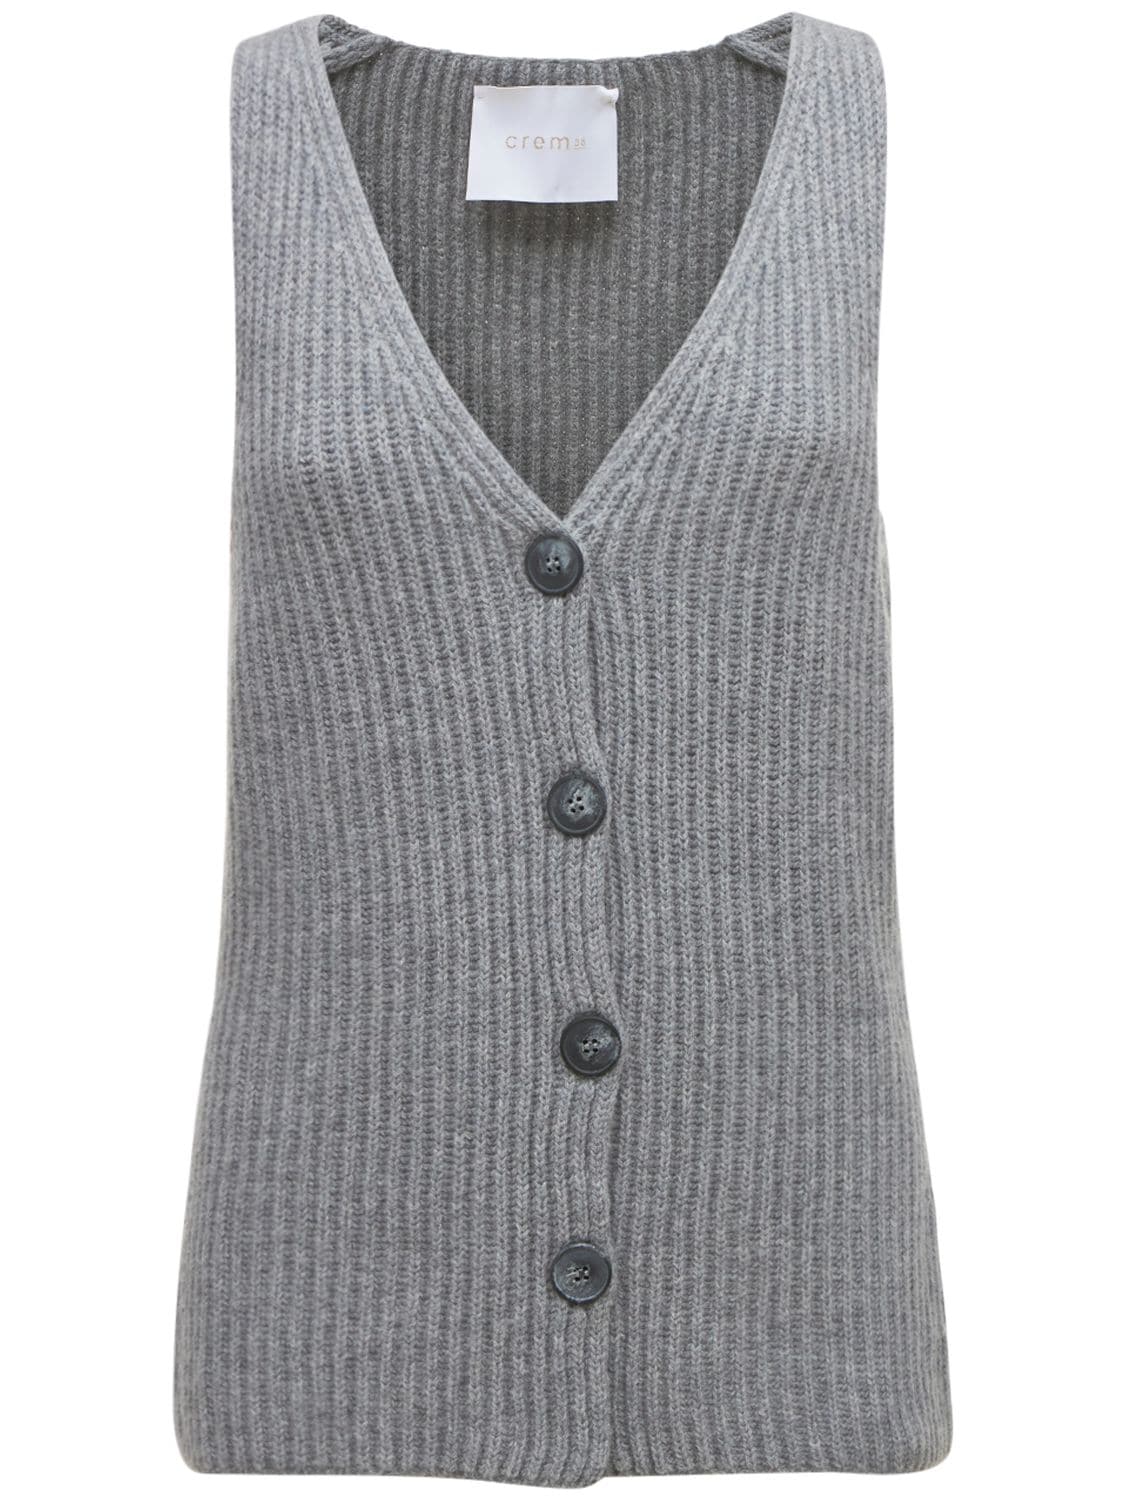 Bacco Wool & Cashmere Knit Vest